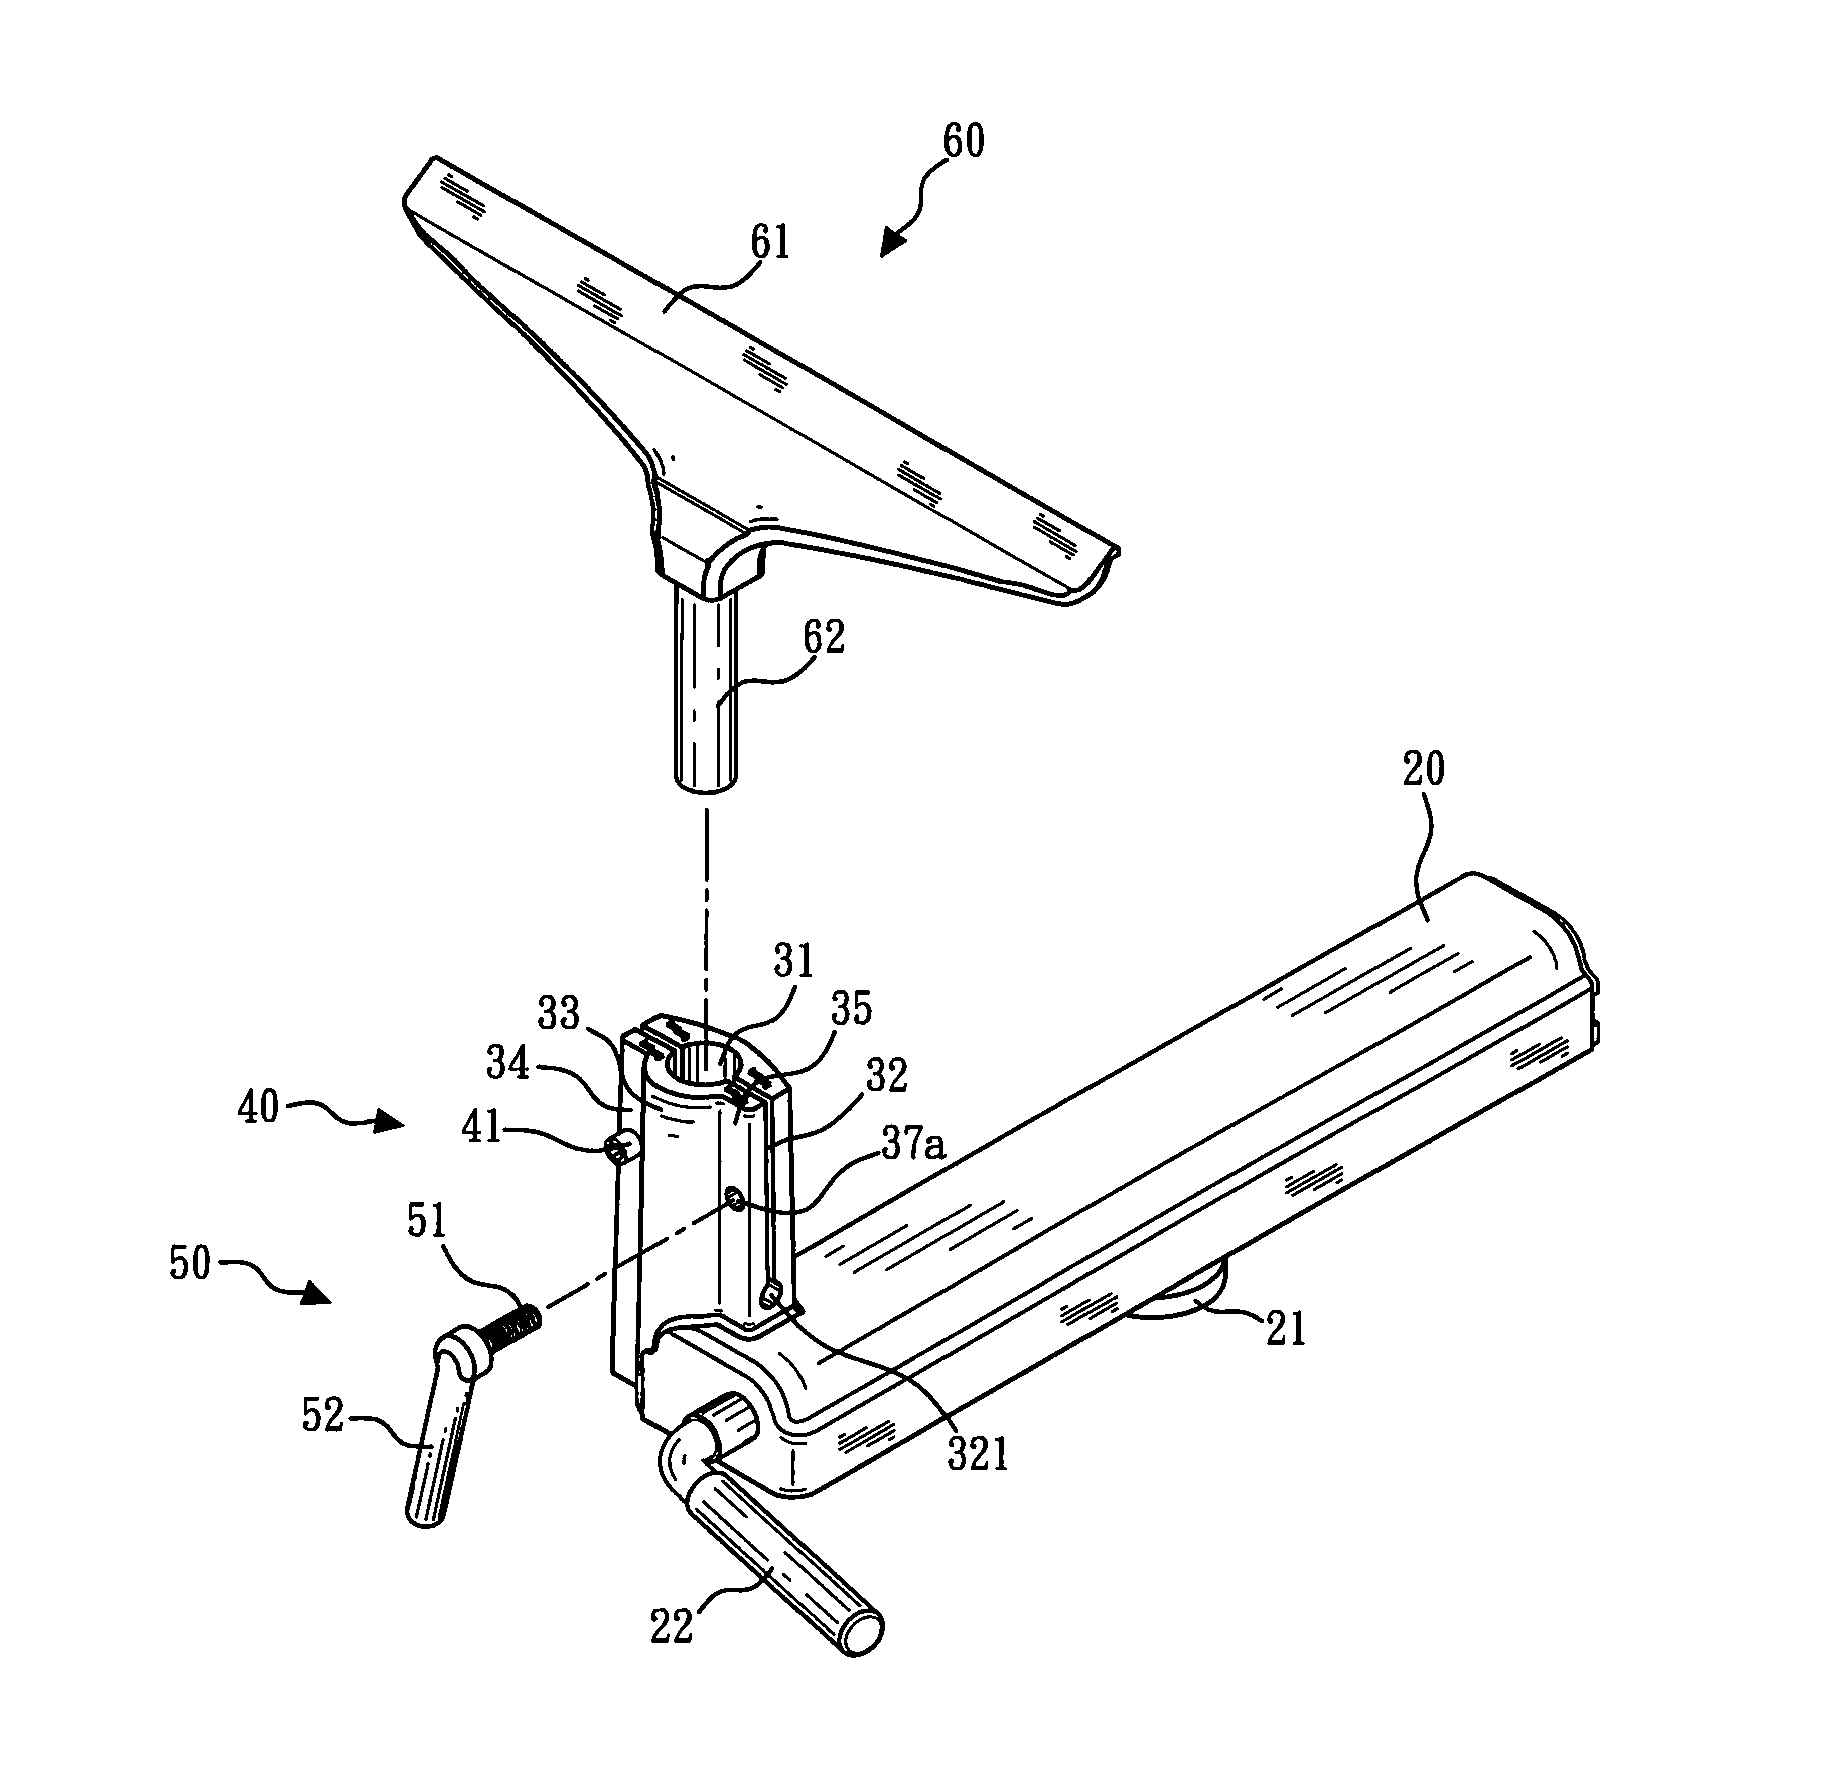 Toolrest mechanism for wood turning lathe